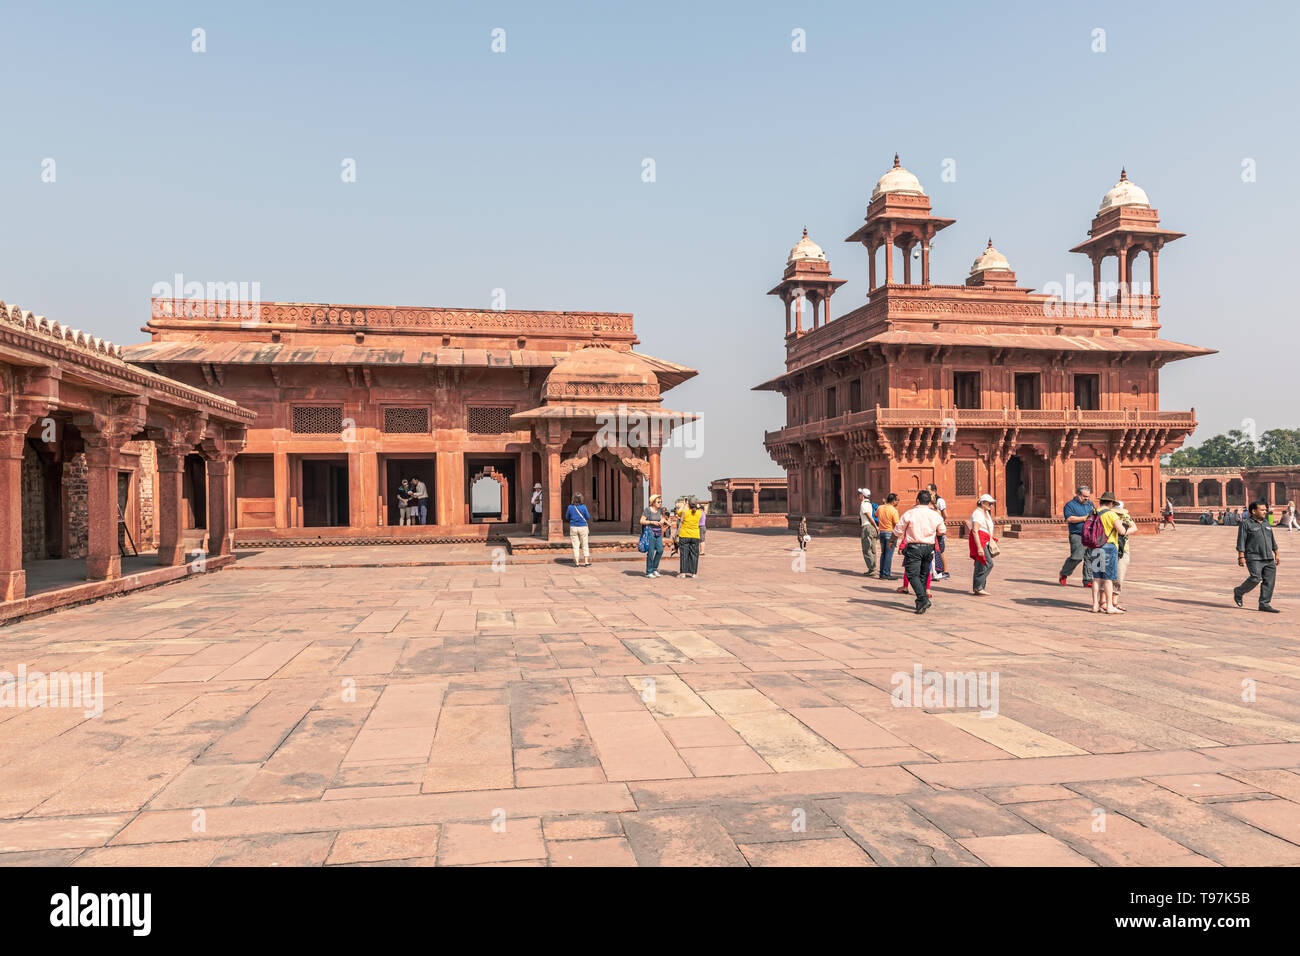 Agra, India - 20 Nov 2018: i turisti in visita a sala di udienza privata, abbandonati Mogul città costruita dal grande imperatore Mughal Akbar al fine XVI sec. Foto Stock